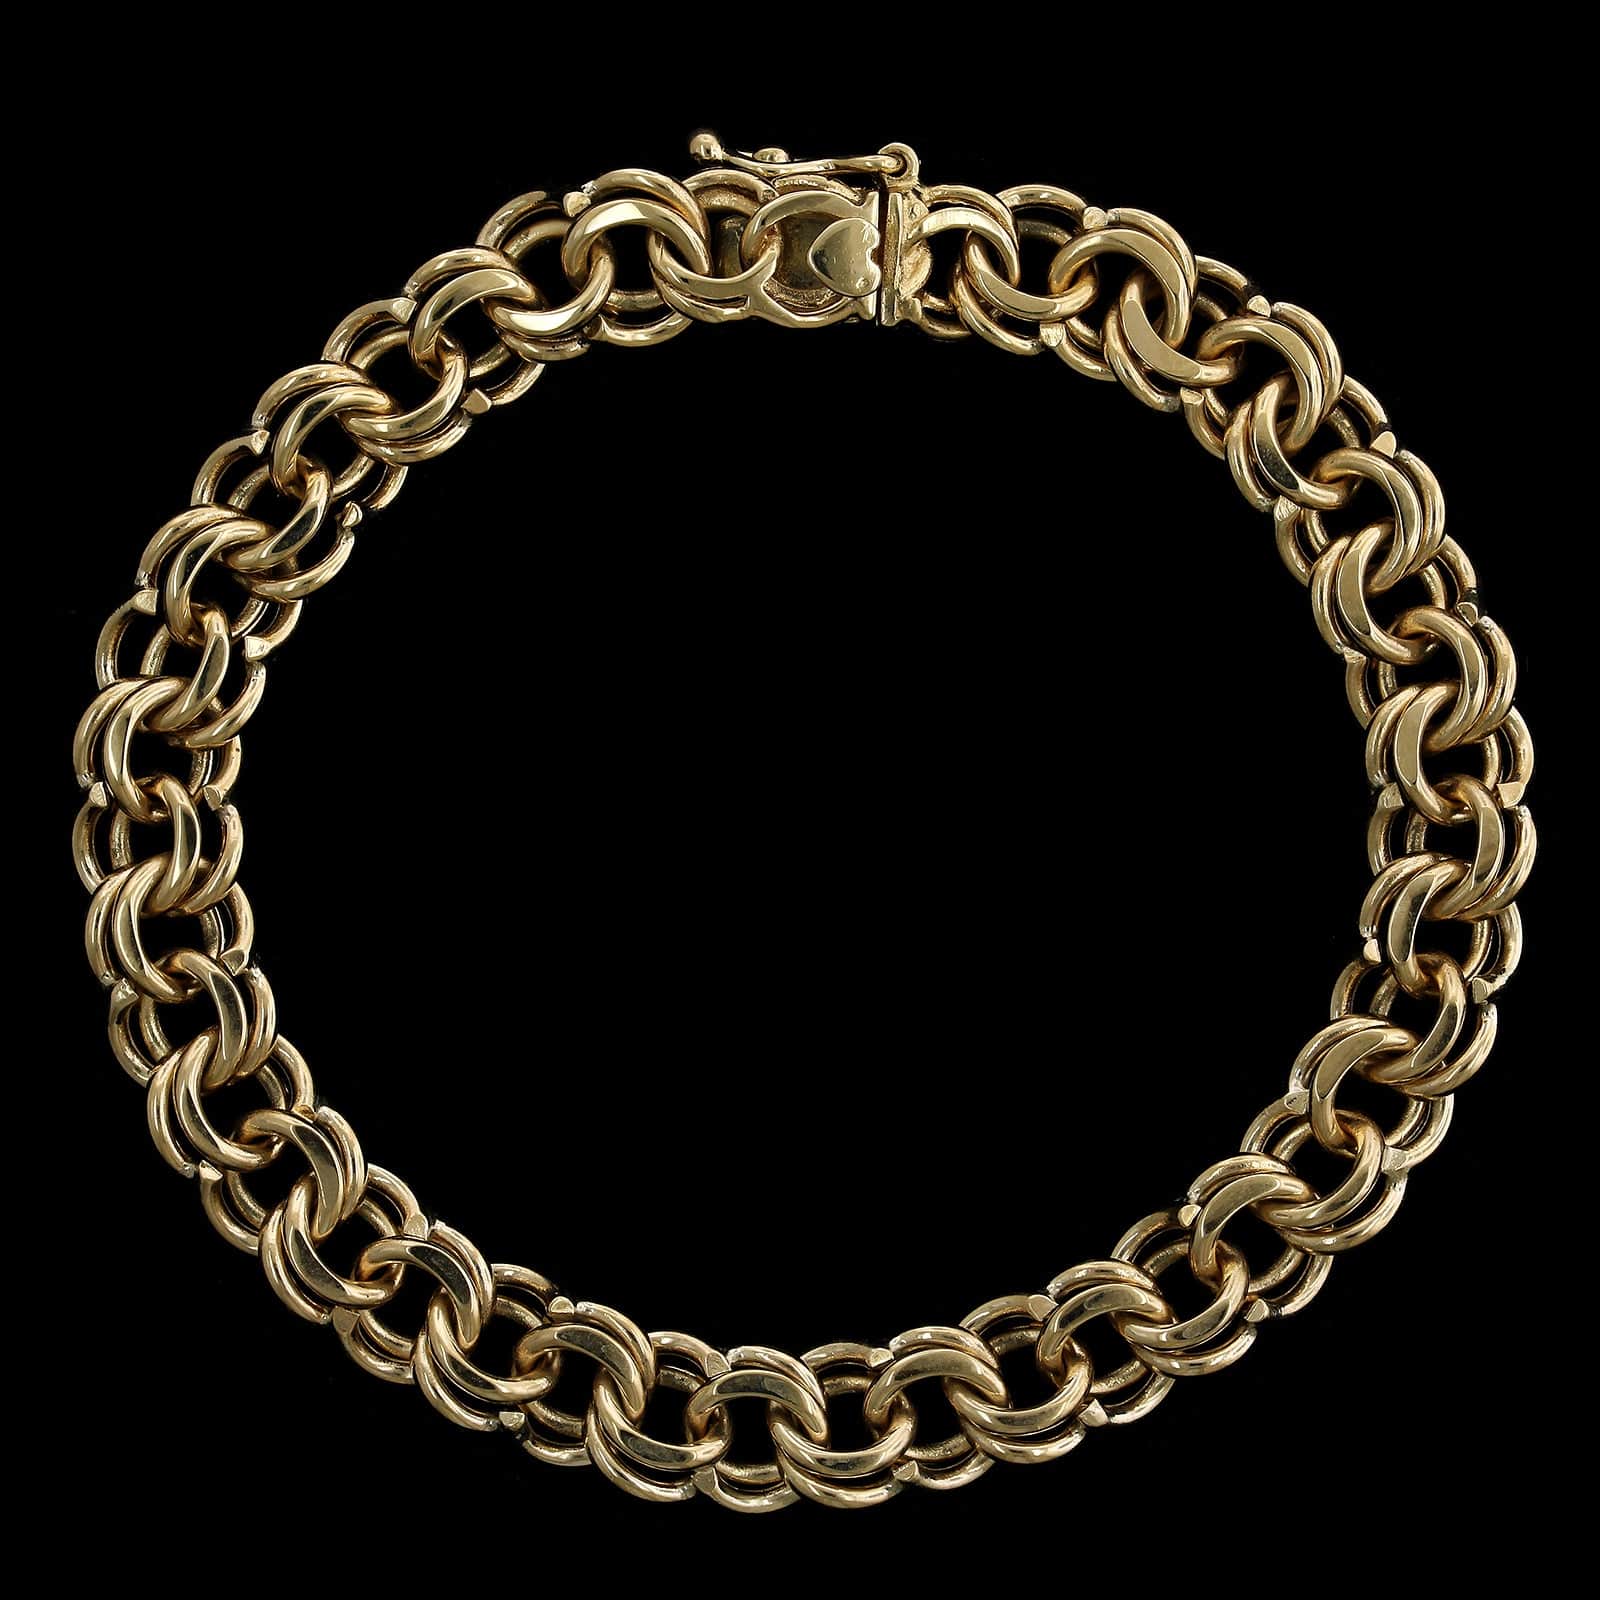 14K Yellow Gold Double Link Charm Bracelet